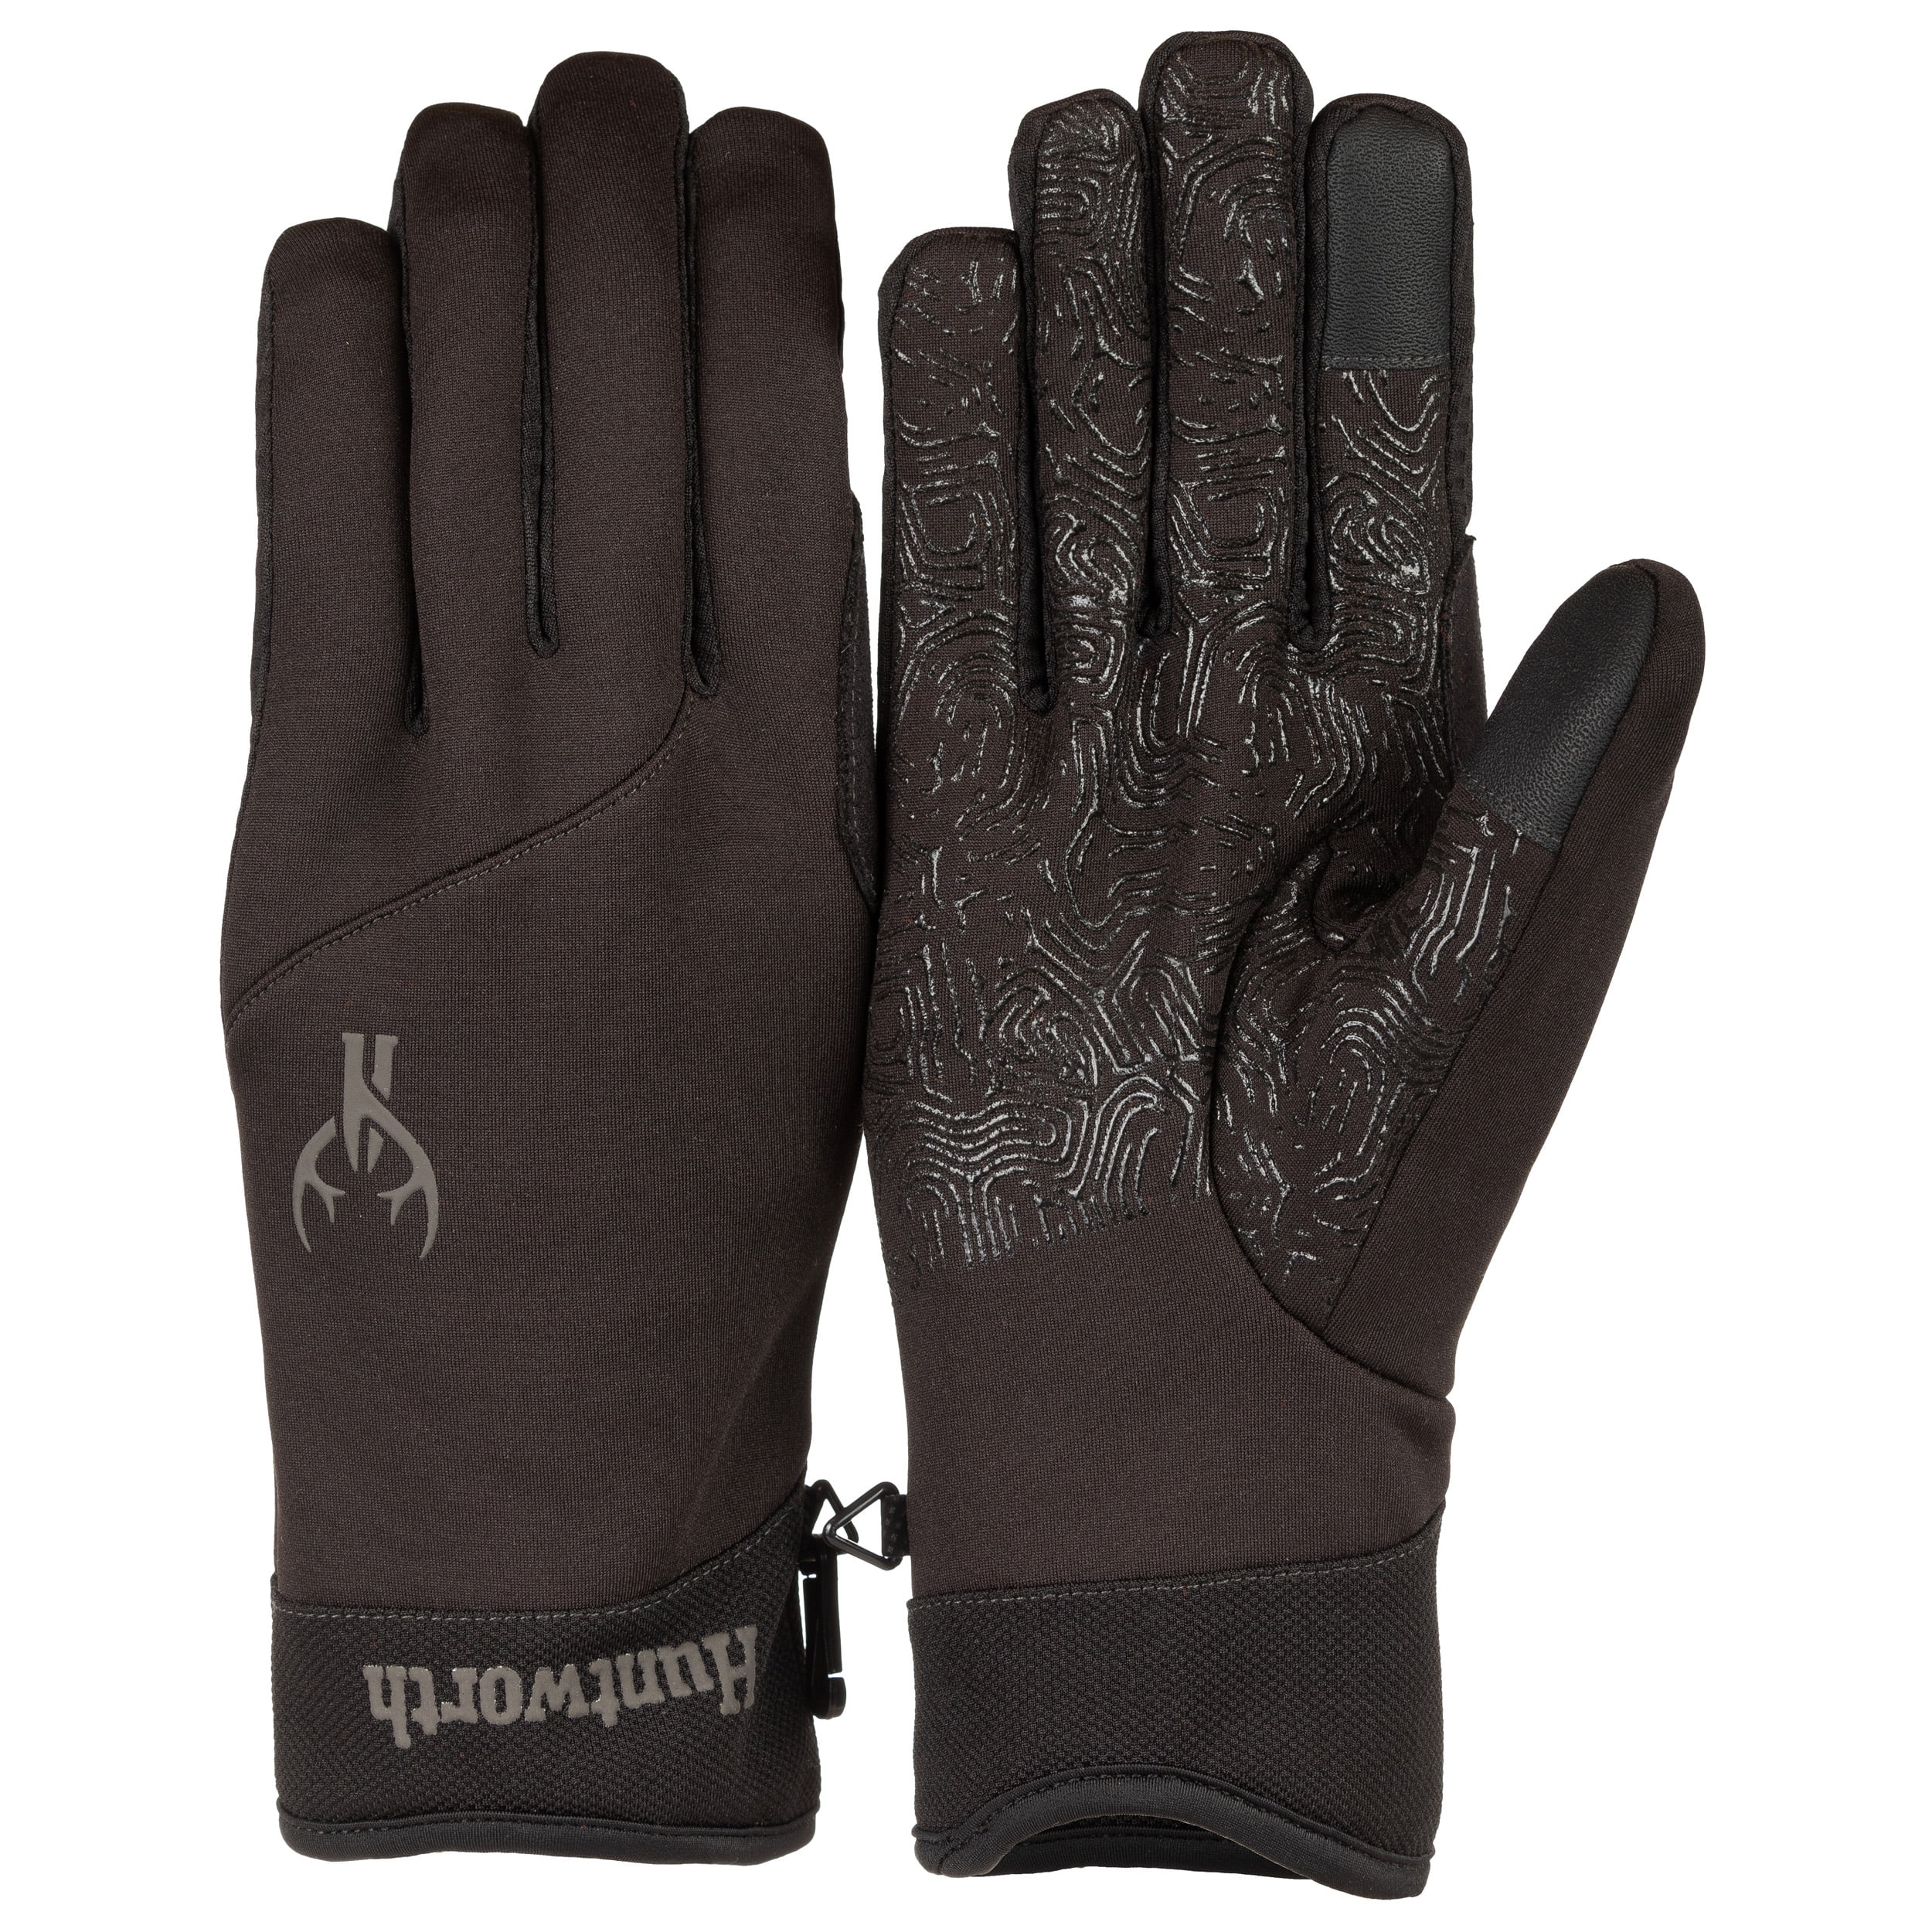 ScentBlocker Stretch Shooting Gloves, Hunting Gloves